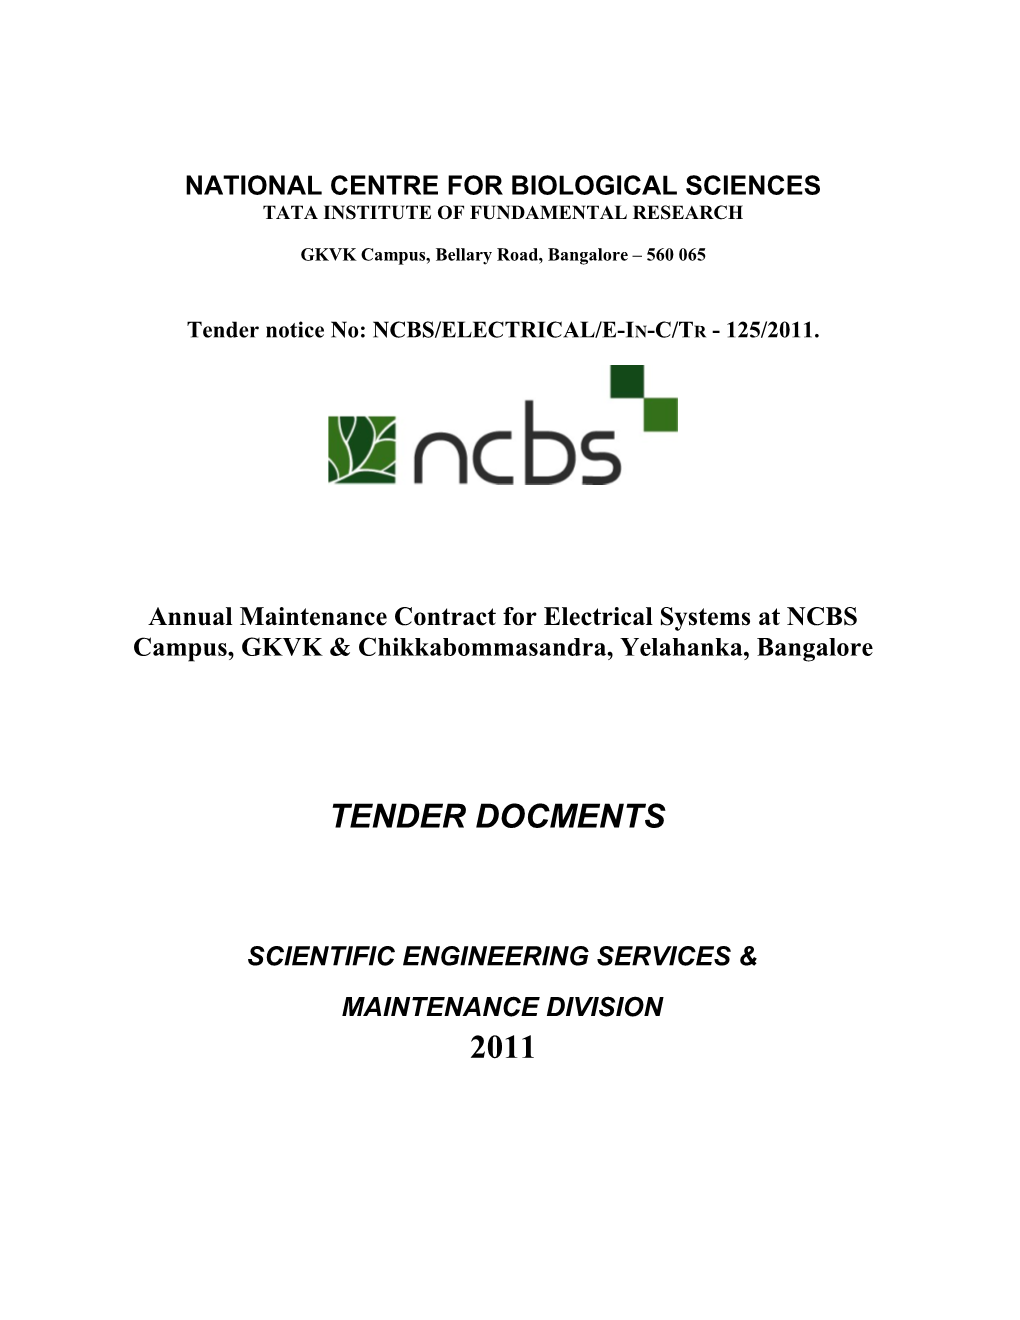 National Centre for Biological Sciences